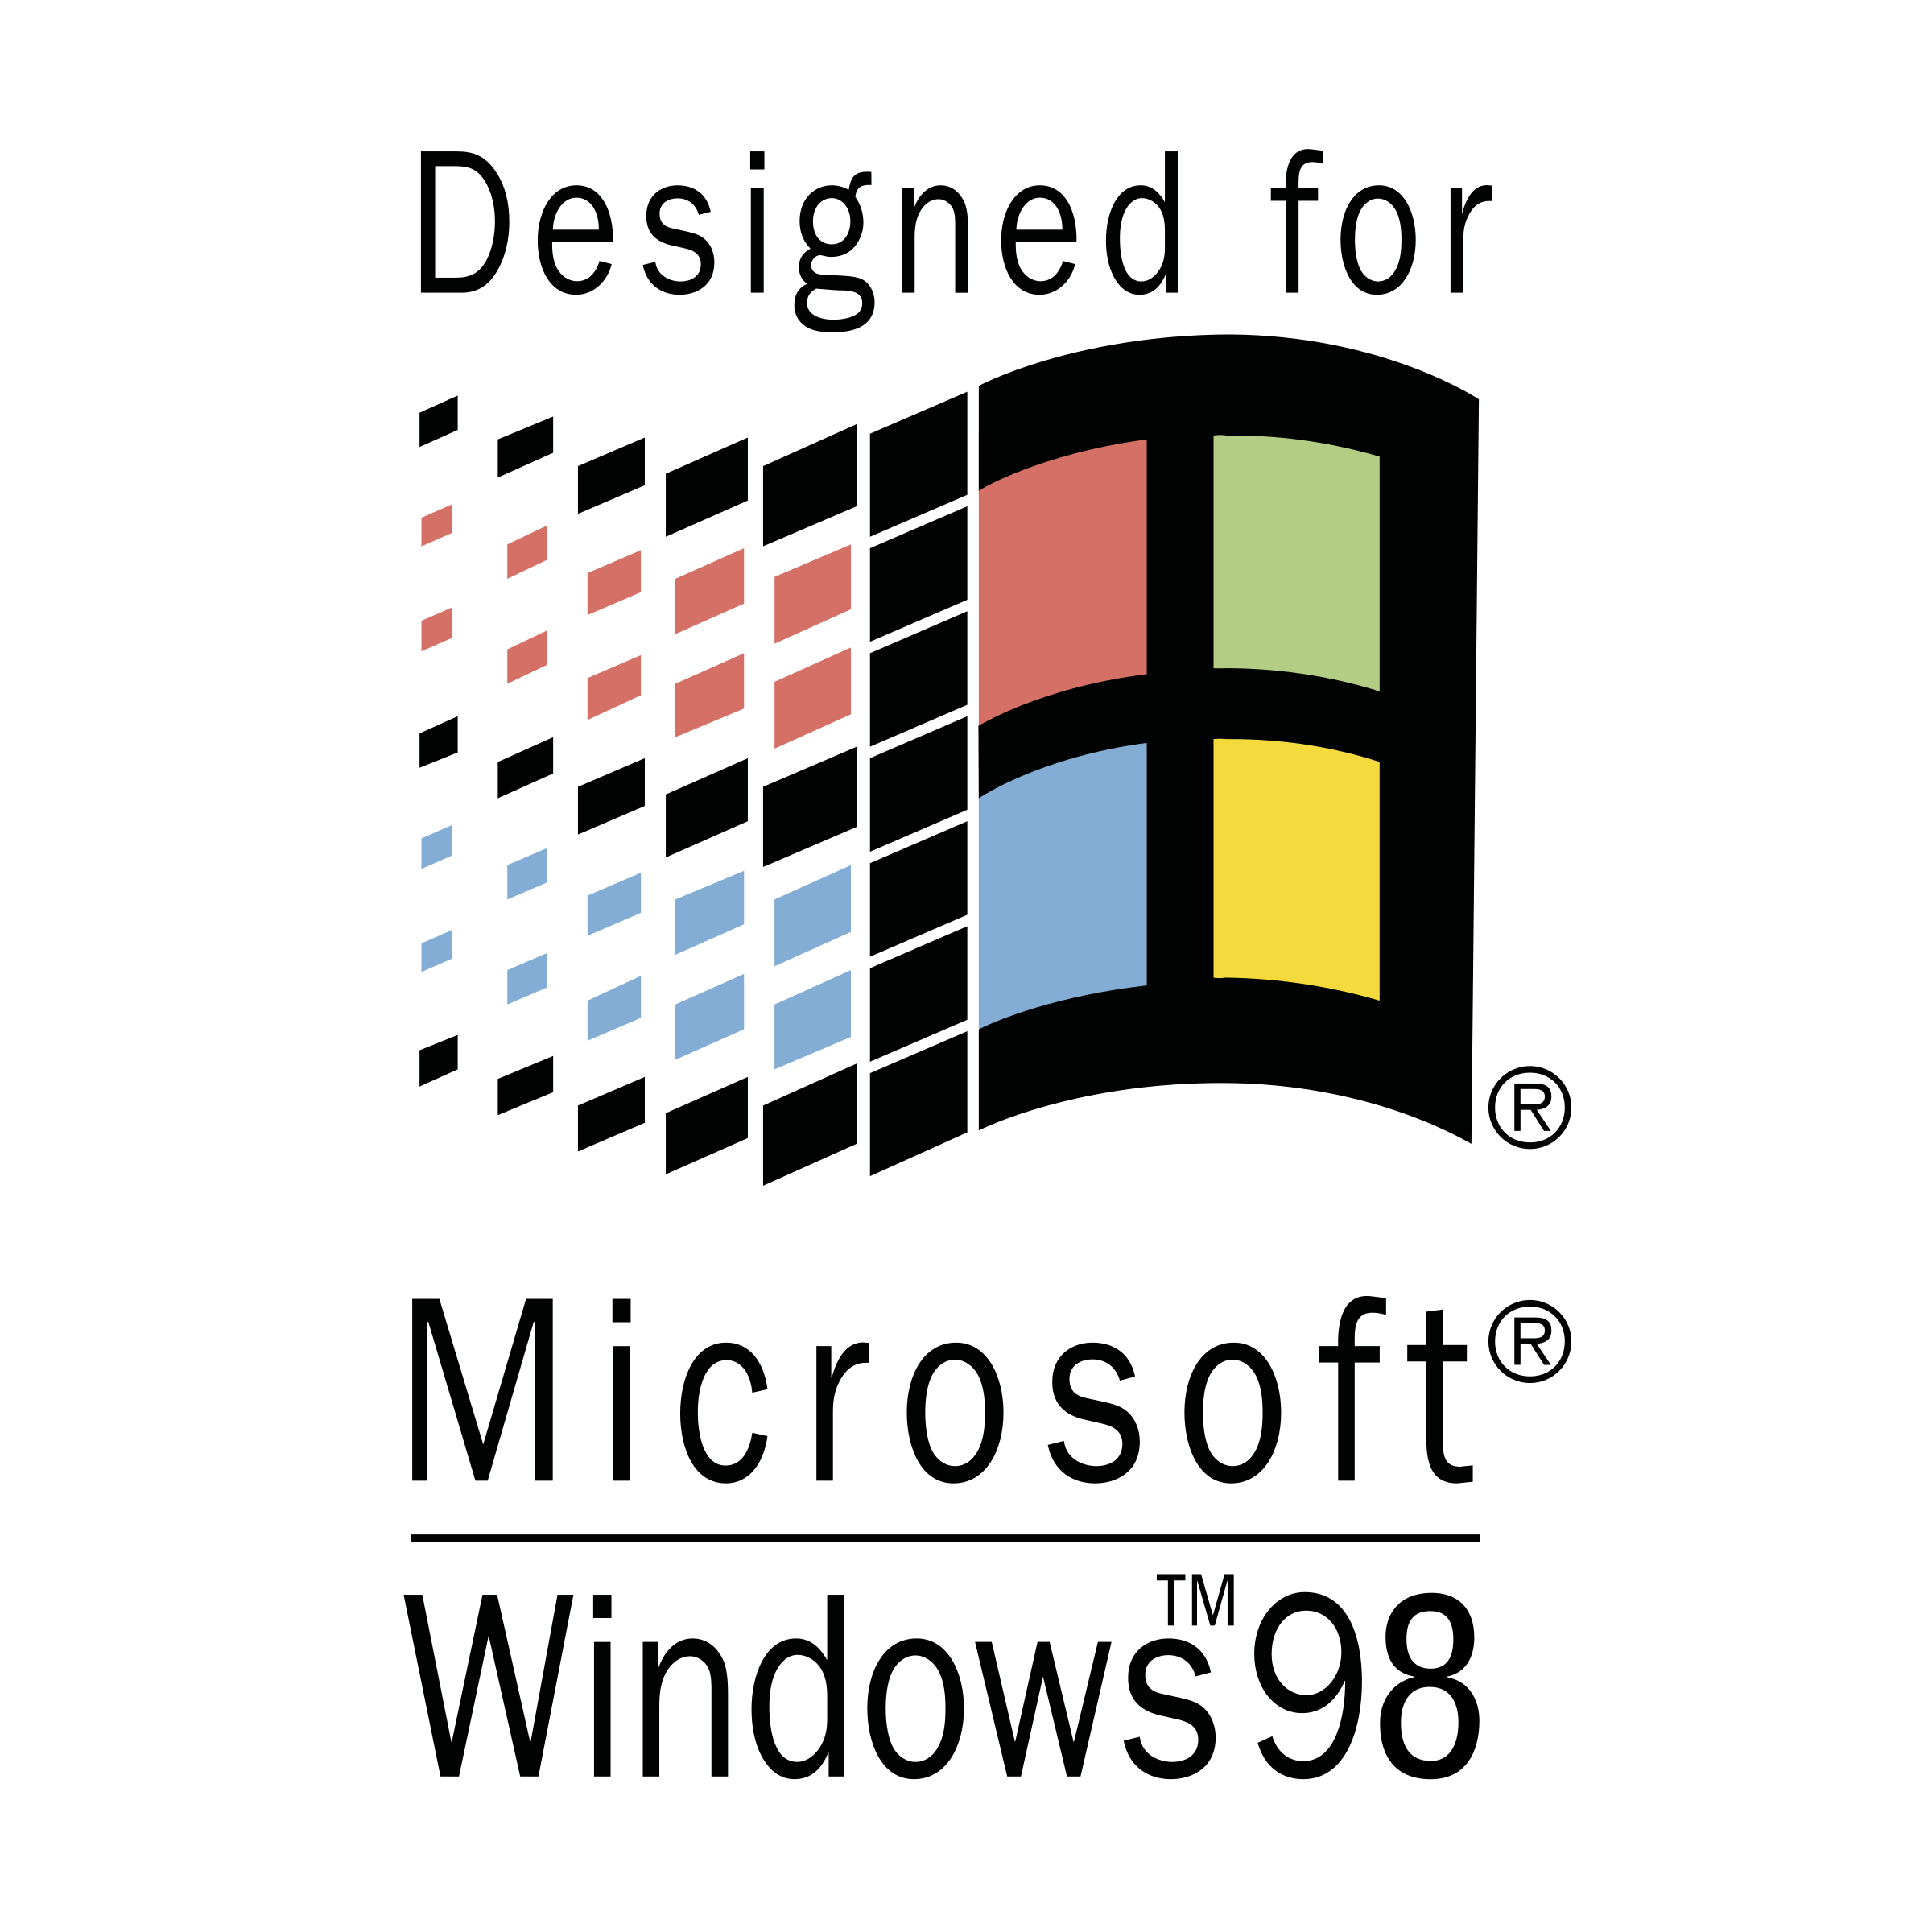 Microsoft Windows 98 Logo - Designed for Microsoft Windows 98 Logo PNG Transparent & SVG Vector ...